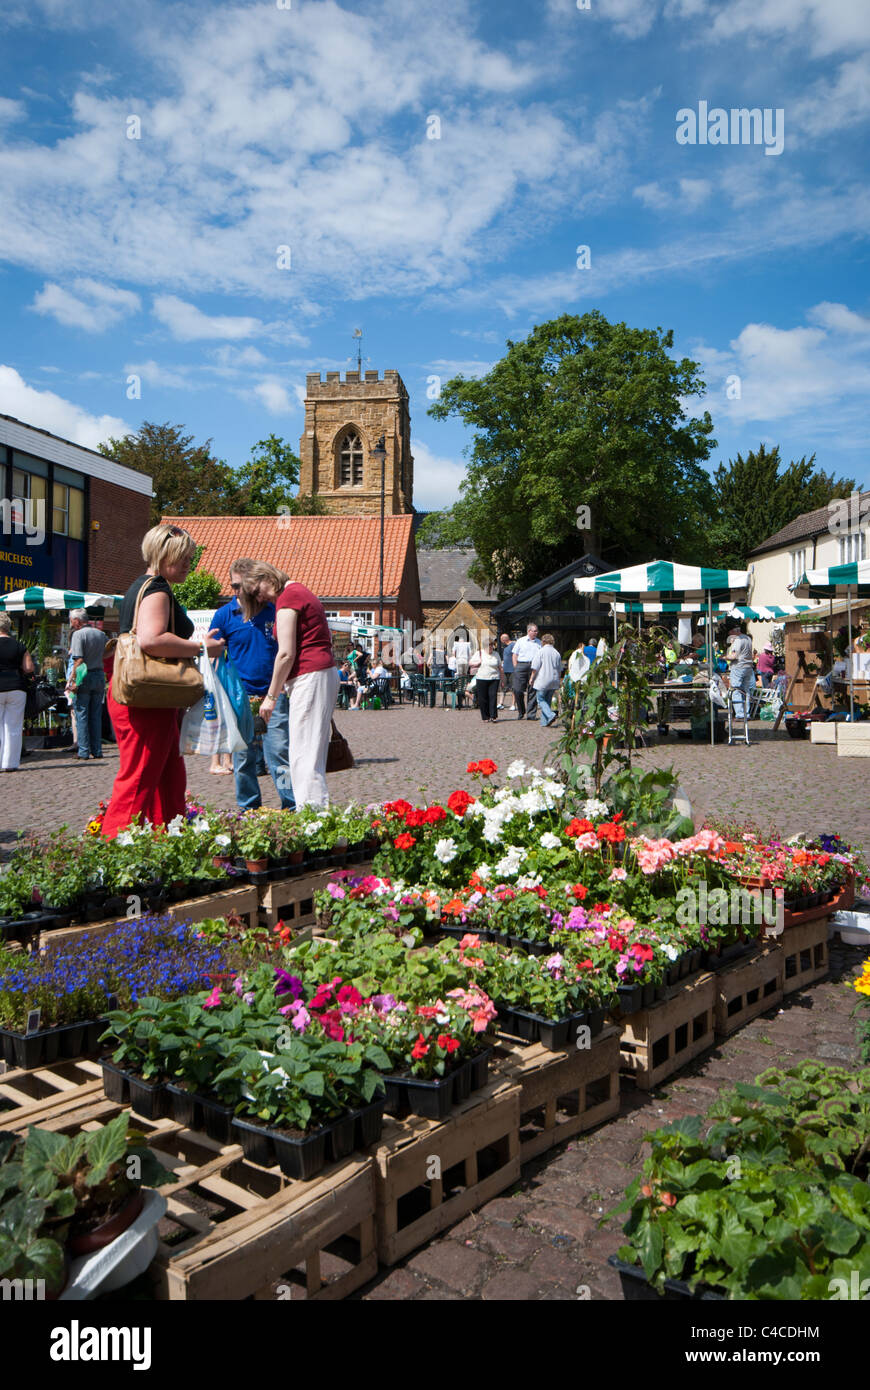 Market Rasen Gardeners Market, held in the Market Square, Market Rasen, Lincolnshire, England, UK. Stock Photo